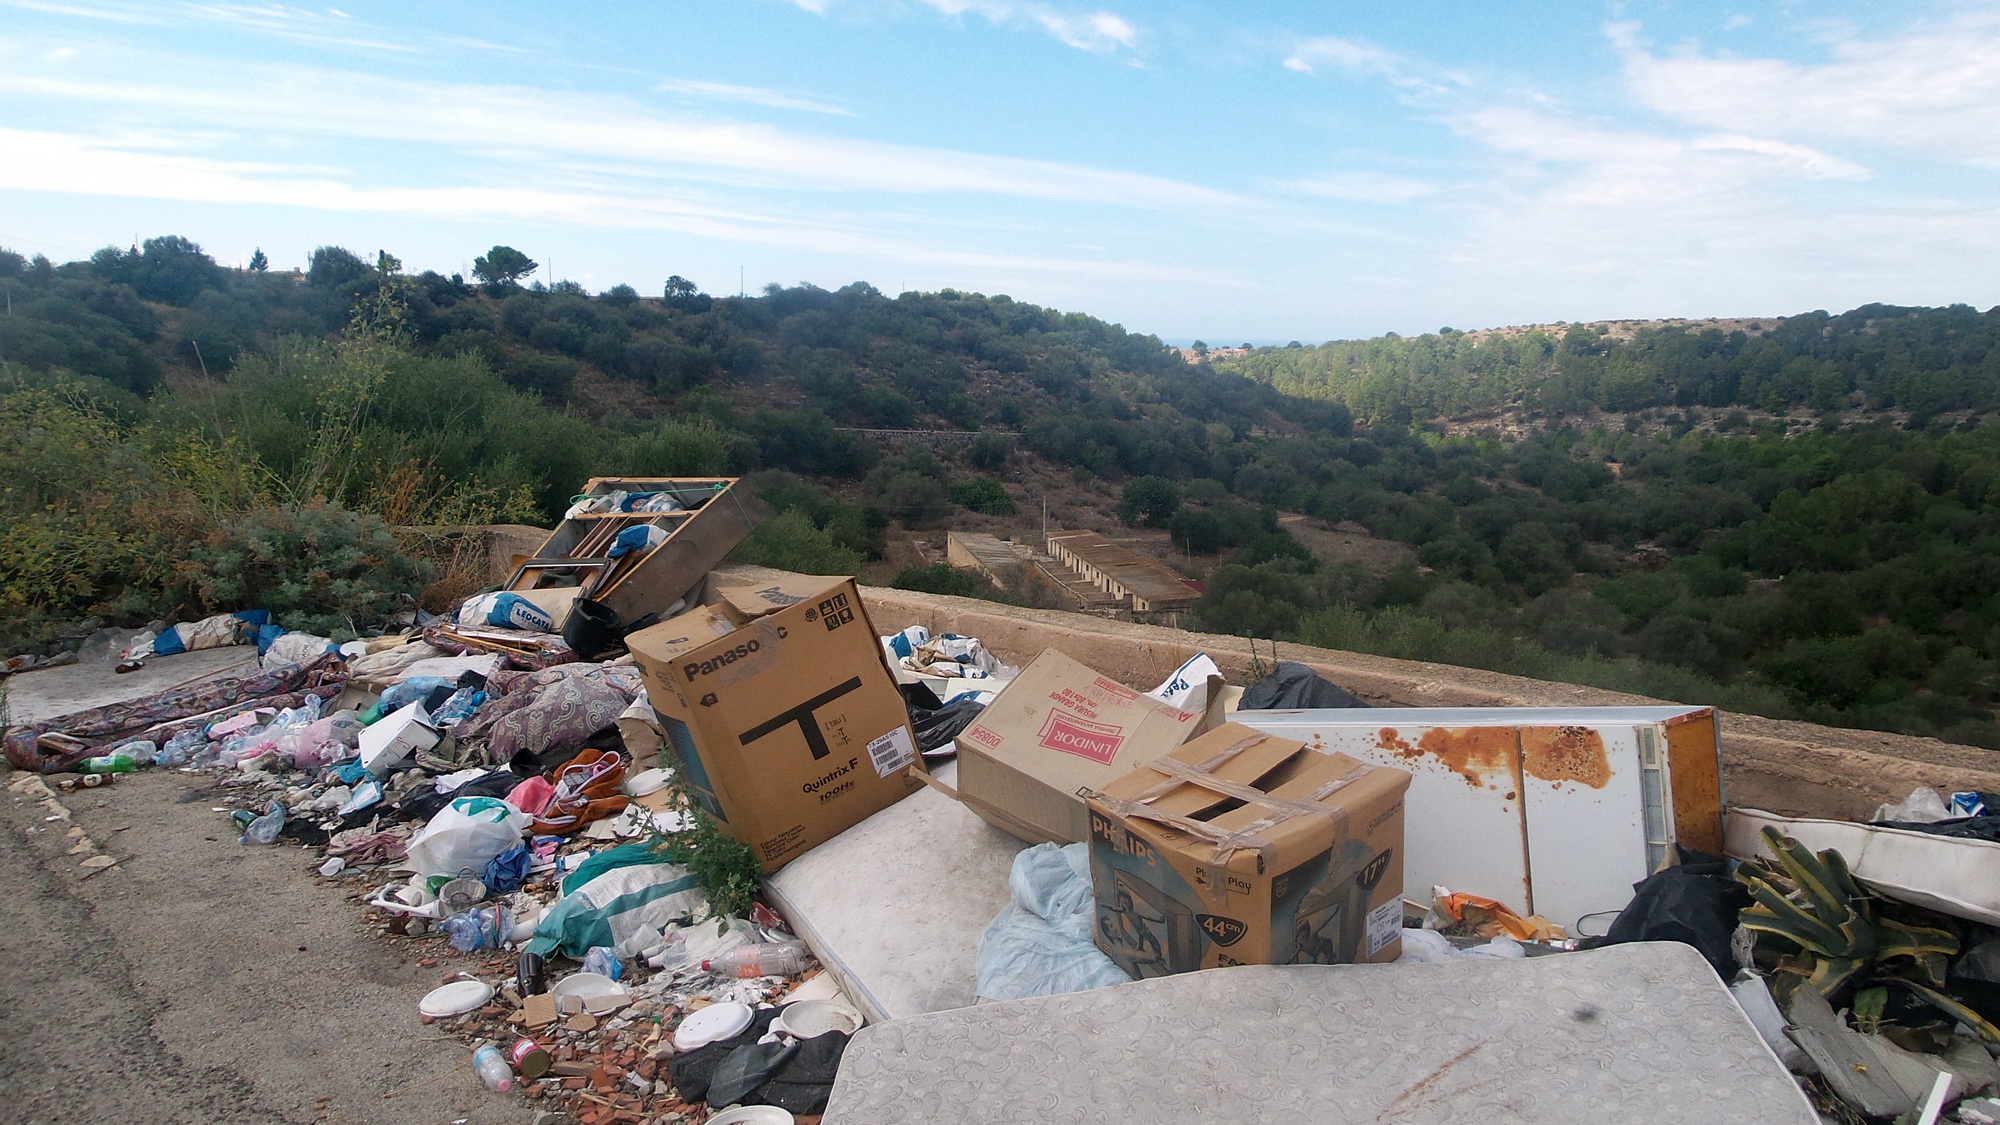  Cumuli di rifiuti in contrada Grassullo: “Da 3 anni denunciamo inutilmente”